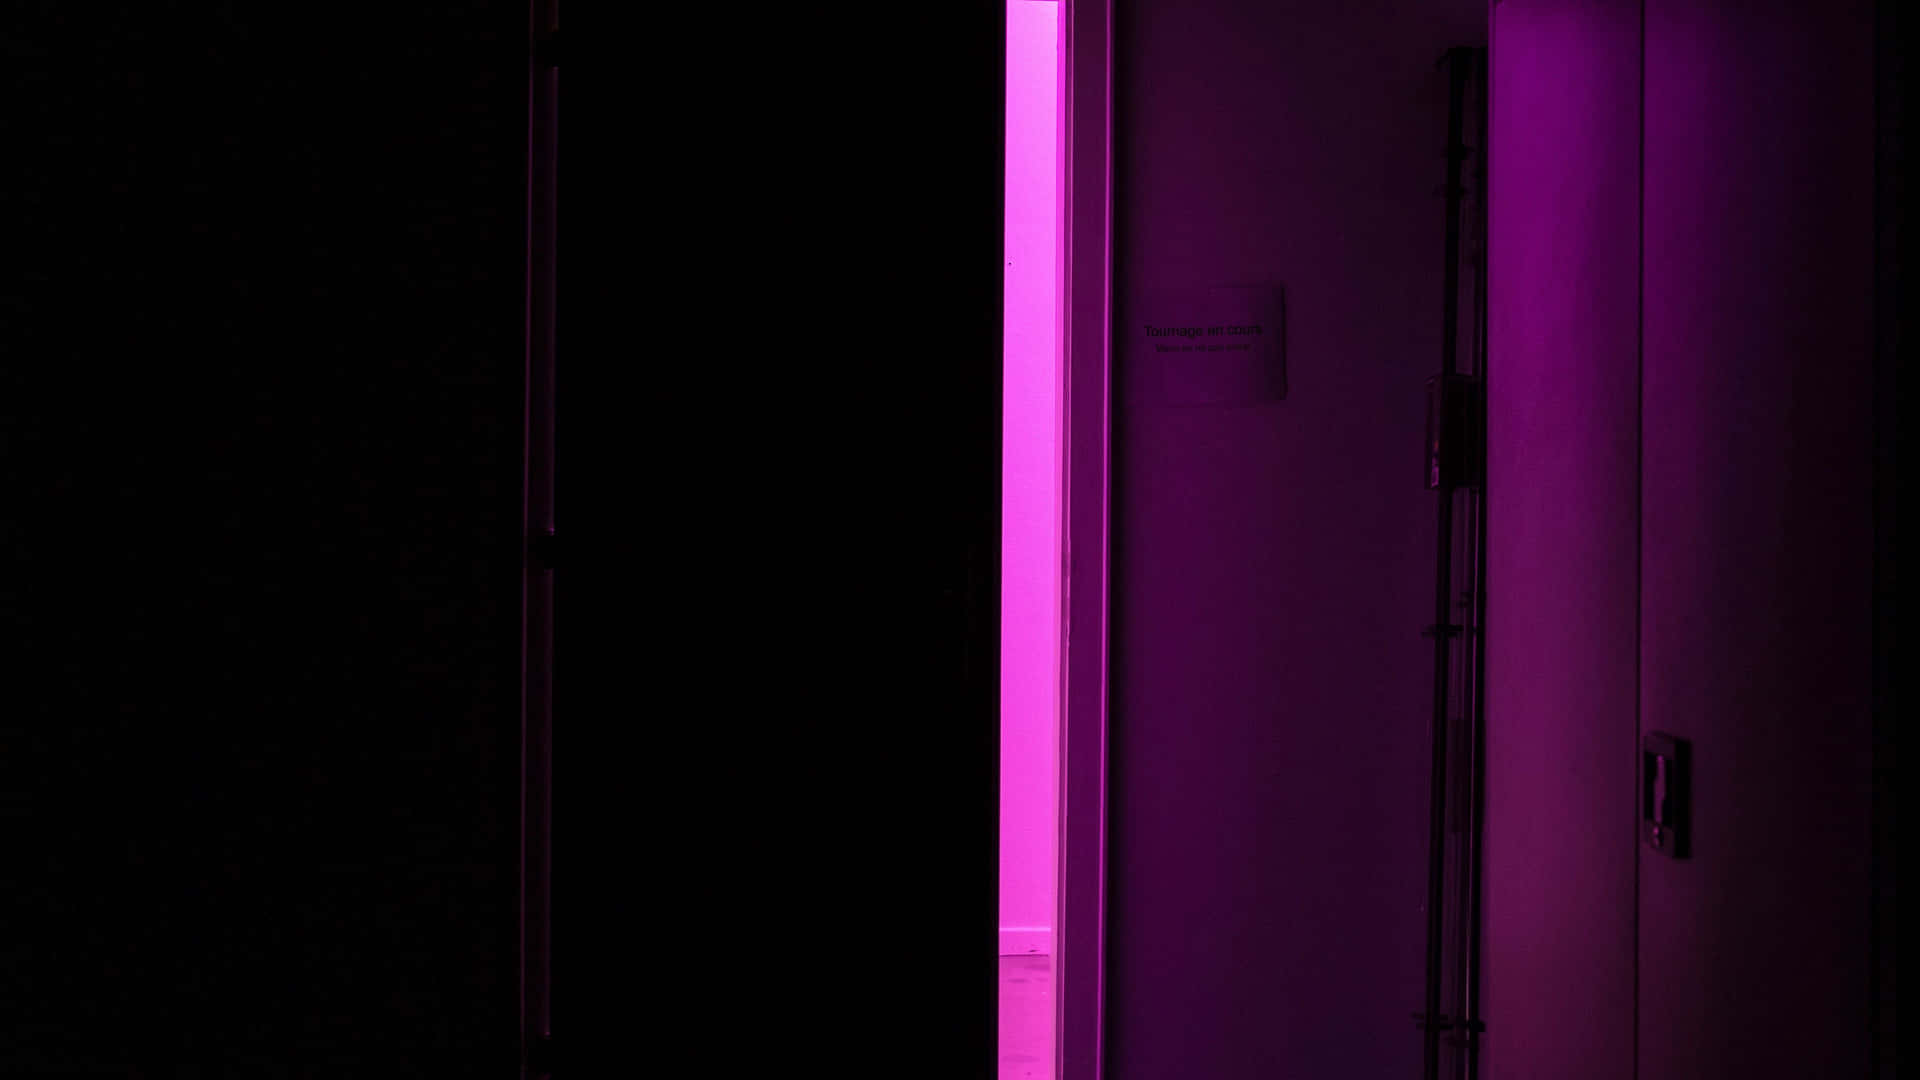 Dark Room with Artistic Lighting Wallpaper